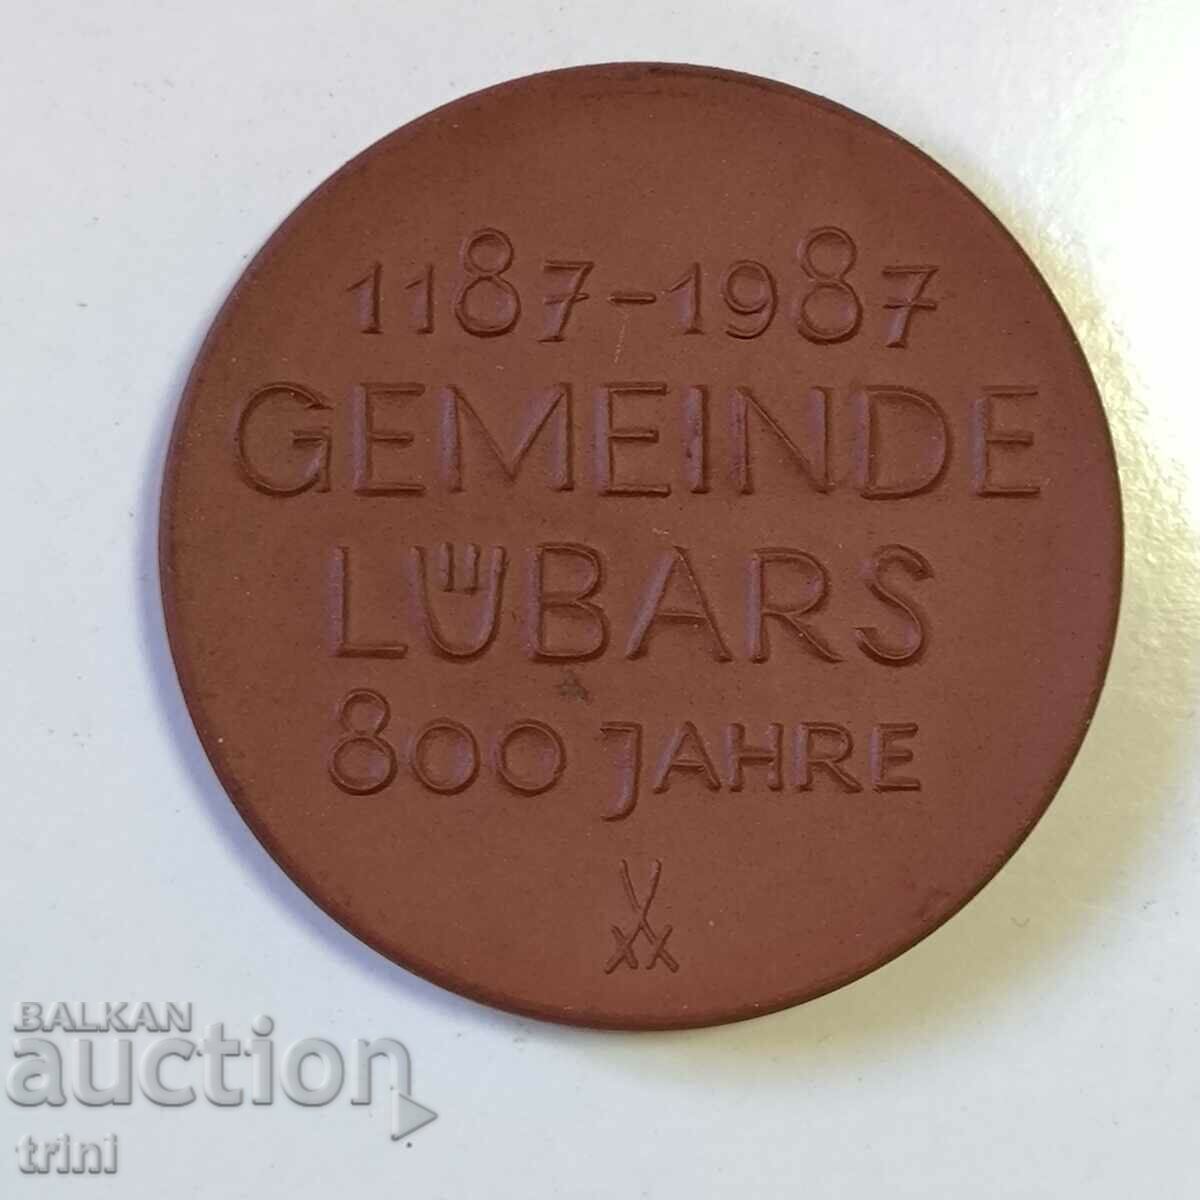 ПЛАКЕТ 800 години общност Lübars 1187-1987